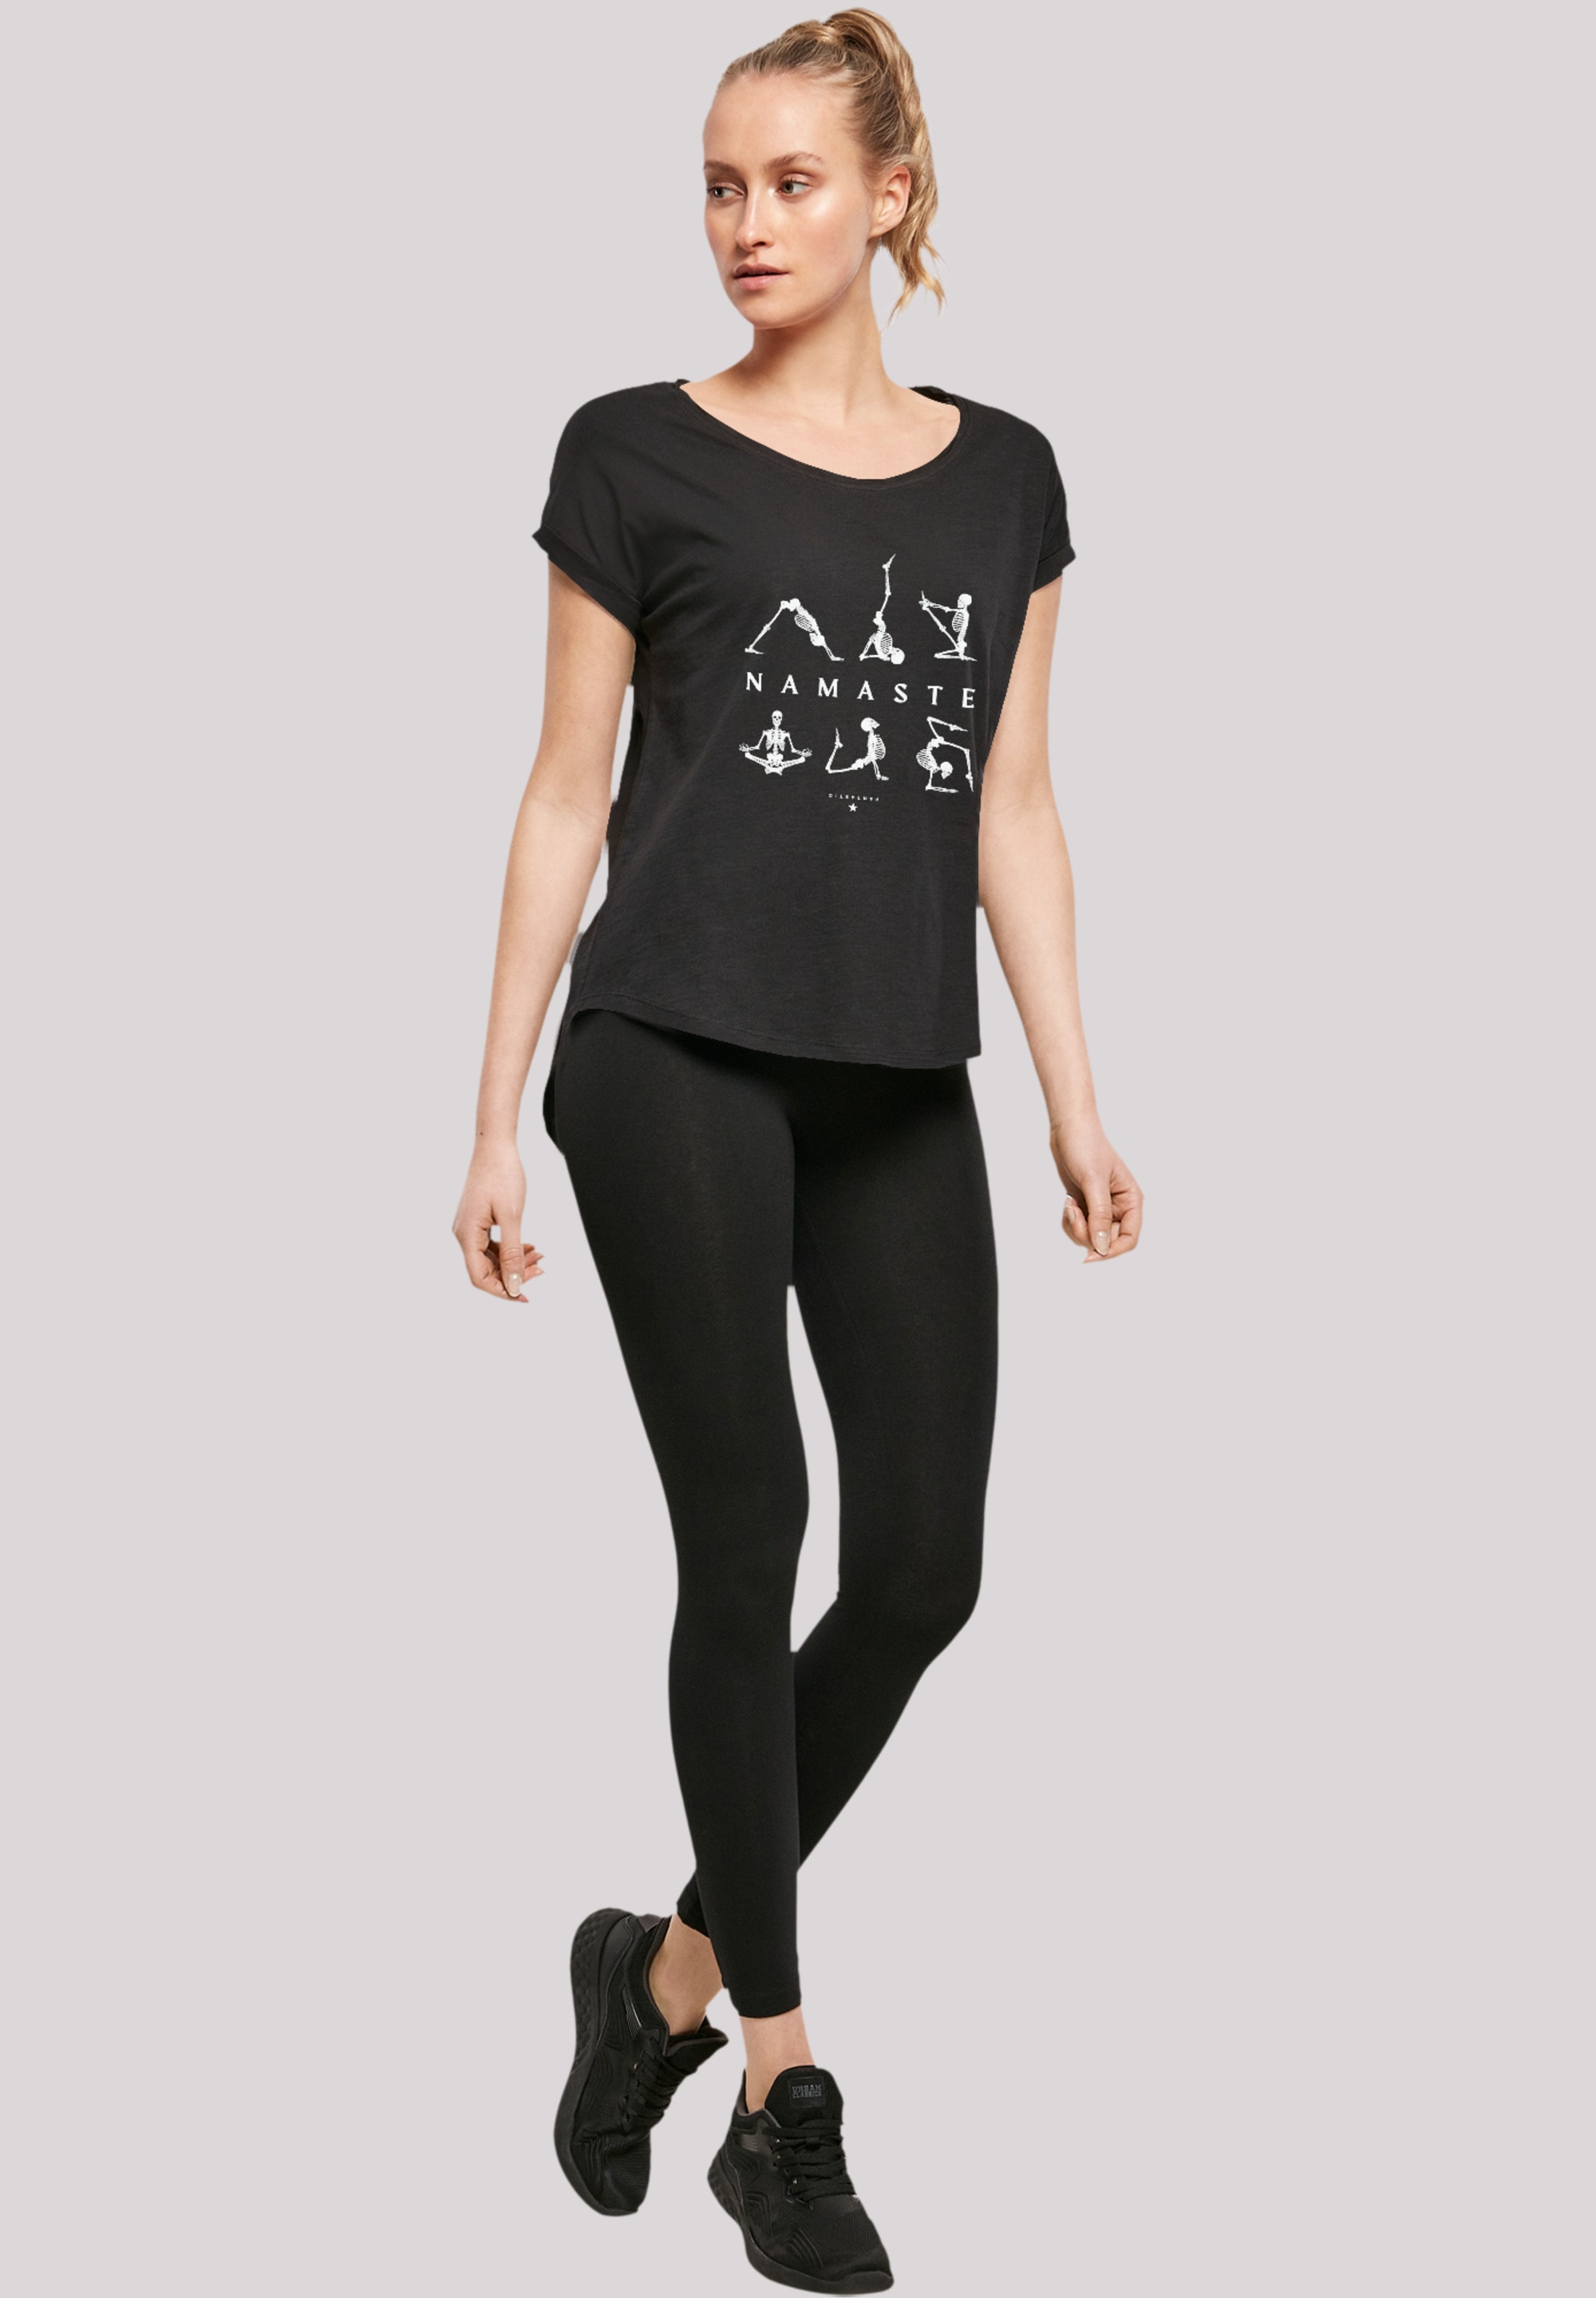 Print BAUR Skelett F4NT4STIC Yoga bestellen »Namaste Halloween«, | T-Shirt